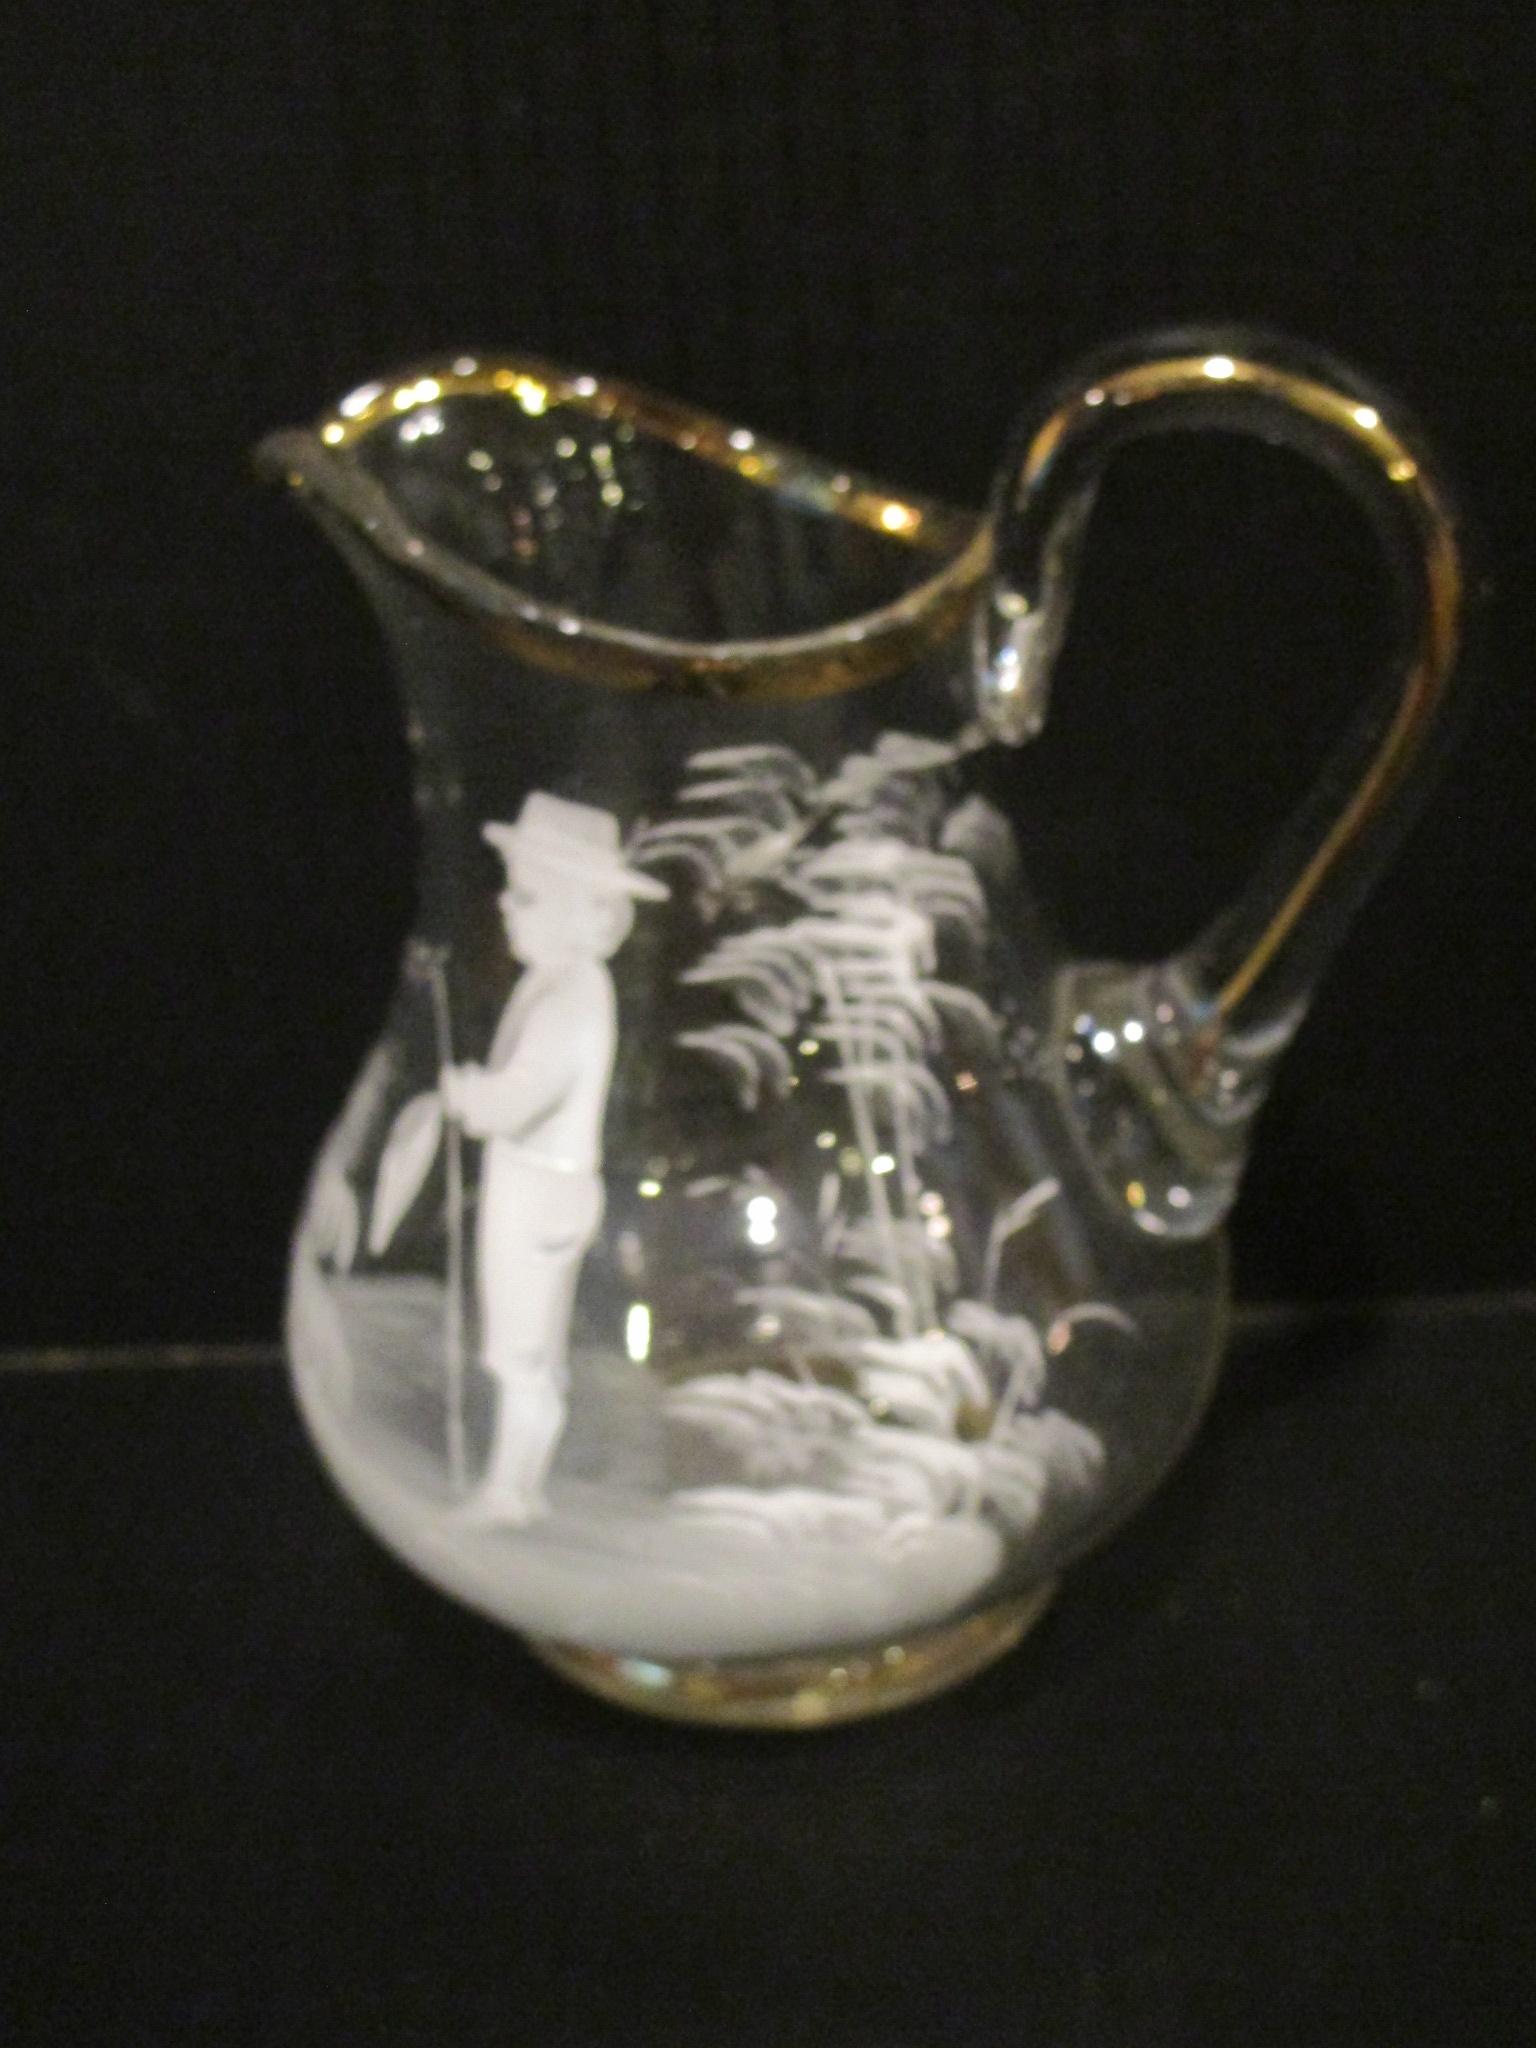 Mary Gregory Glass Creamer - Atlantic City 1894 Souvenir - Clear Glass w/ Gilt Accent